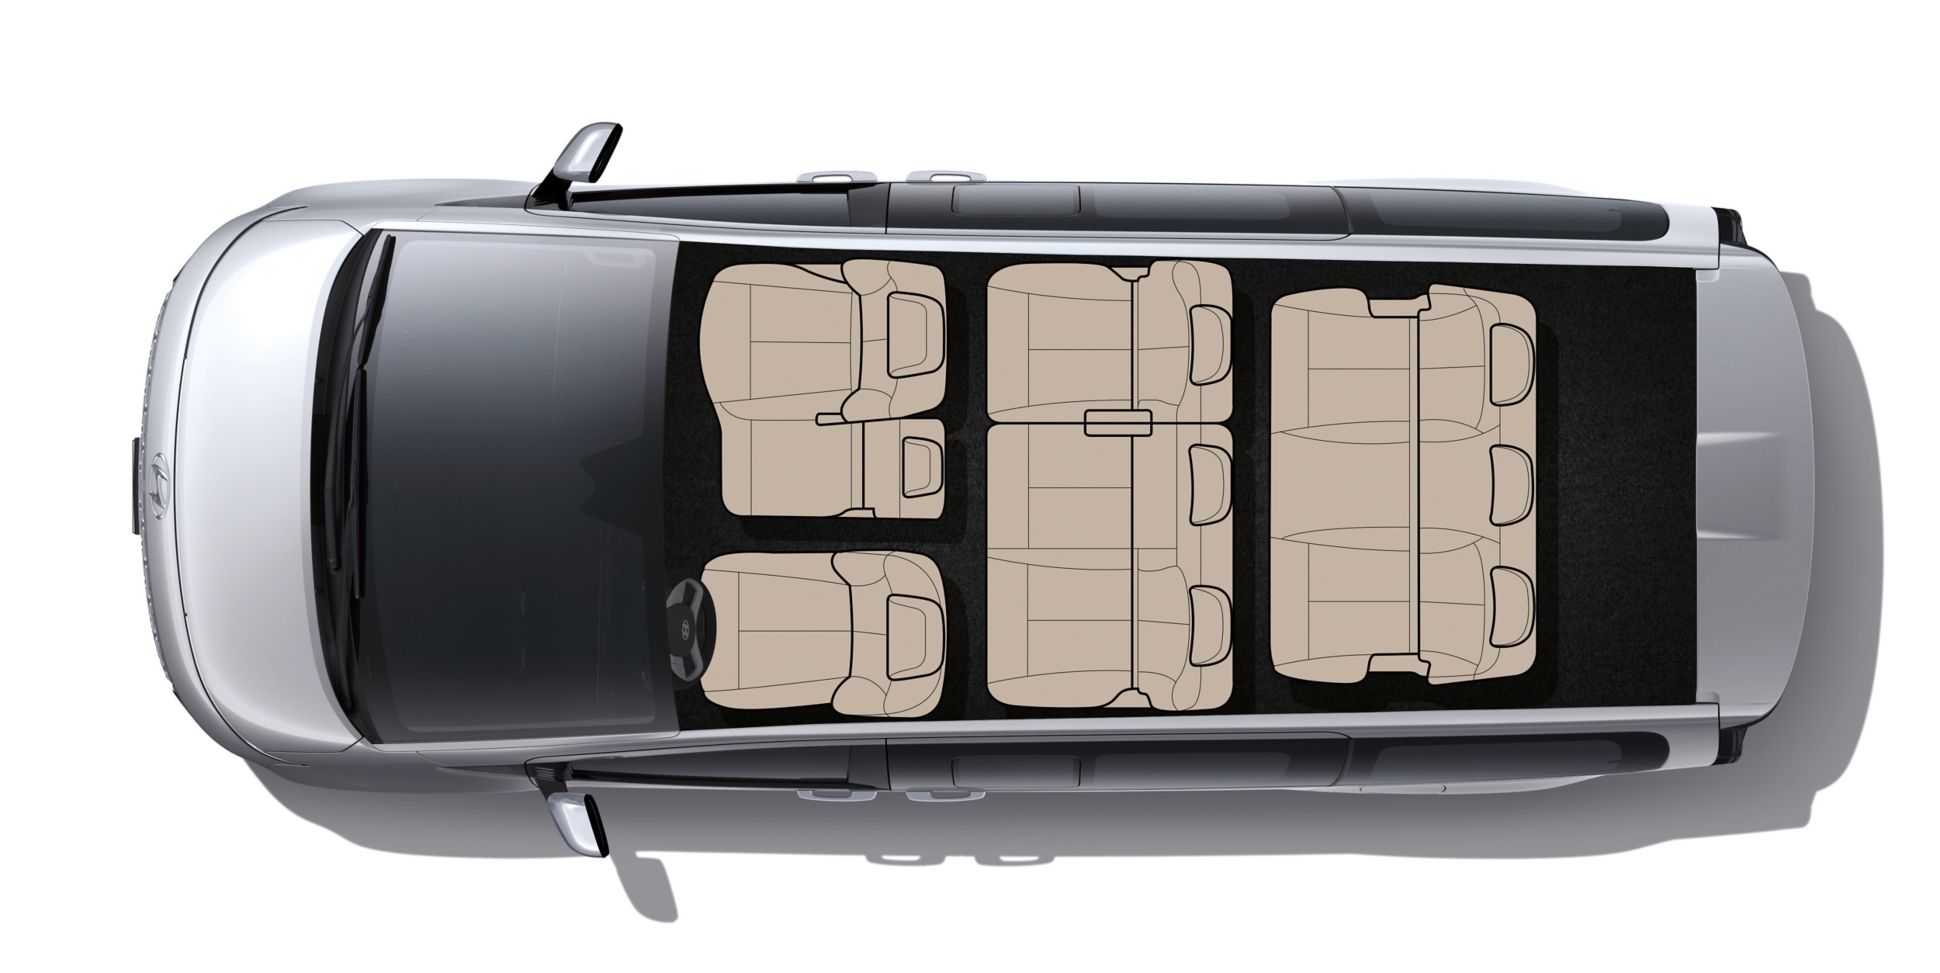 Topview of the Hyundai Staria 9 seating arrangement